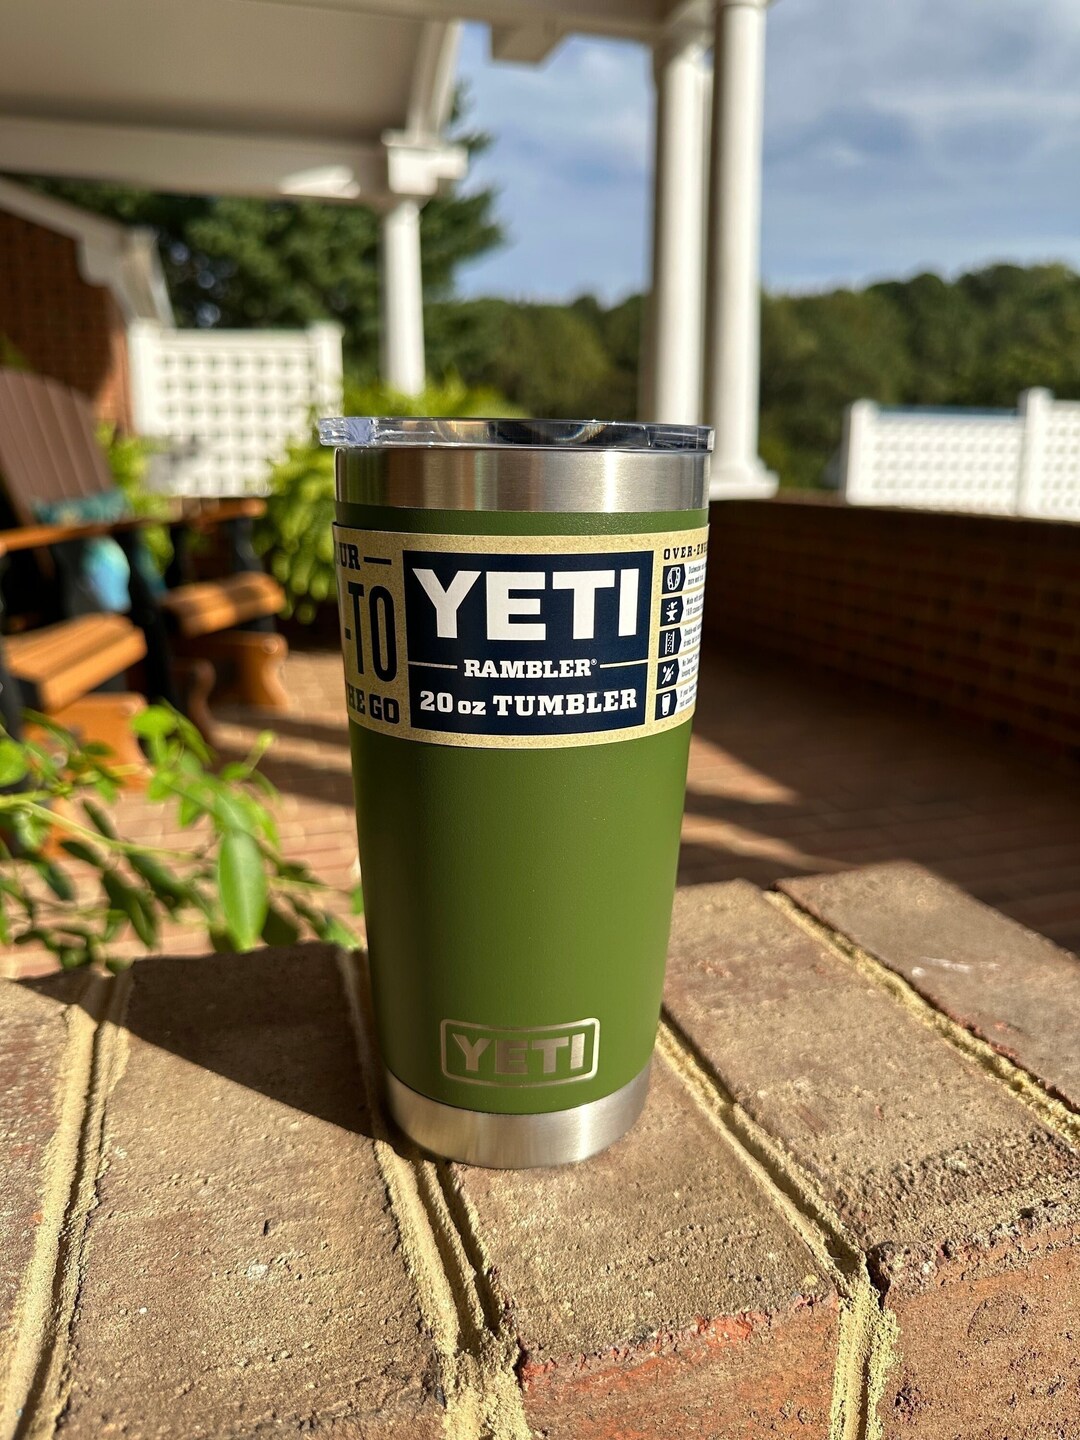 Personalized Yeti Rambler 35oz Canopy Green Custom Engraved Salt